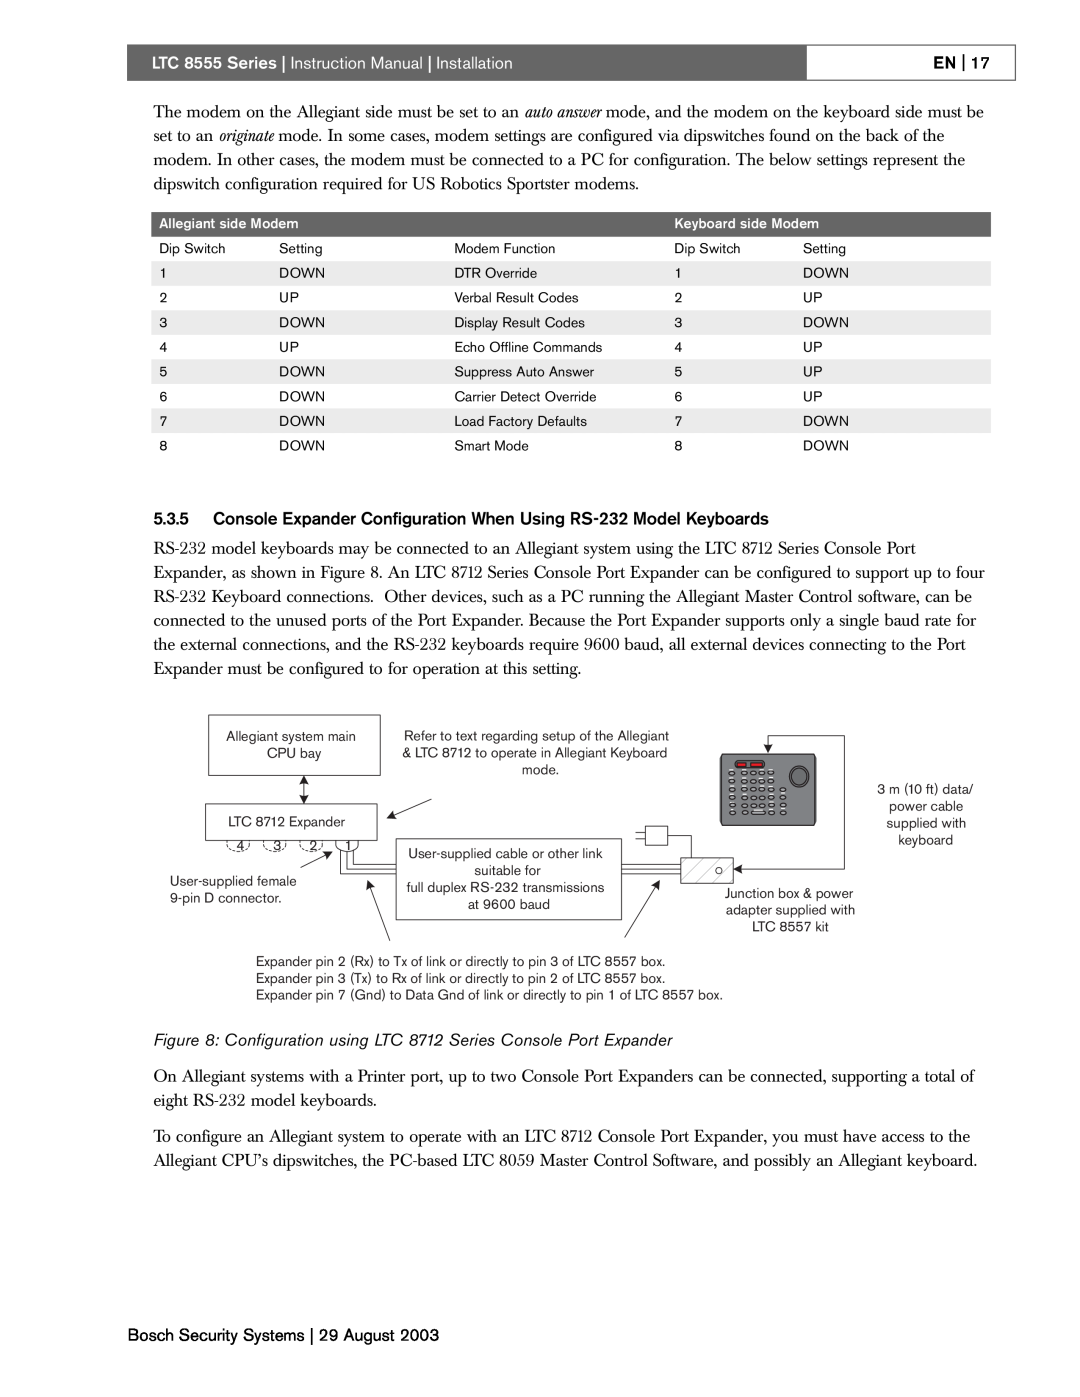 Bosch Appliances 8555 Configuration using LTC 8712 Series Console Port Expander, Allegiant side Modem, Keyboard side Modem 